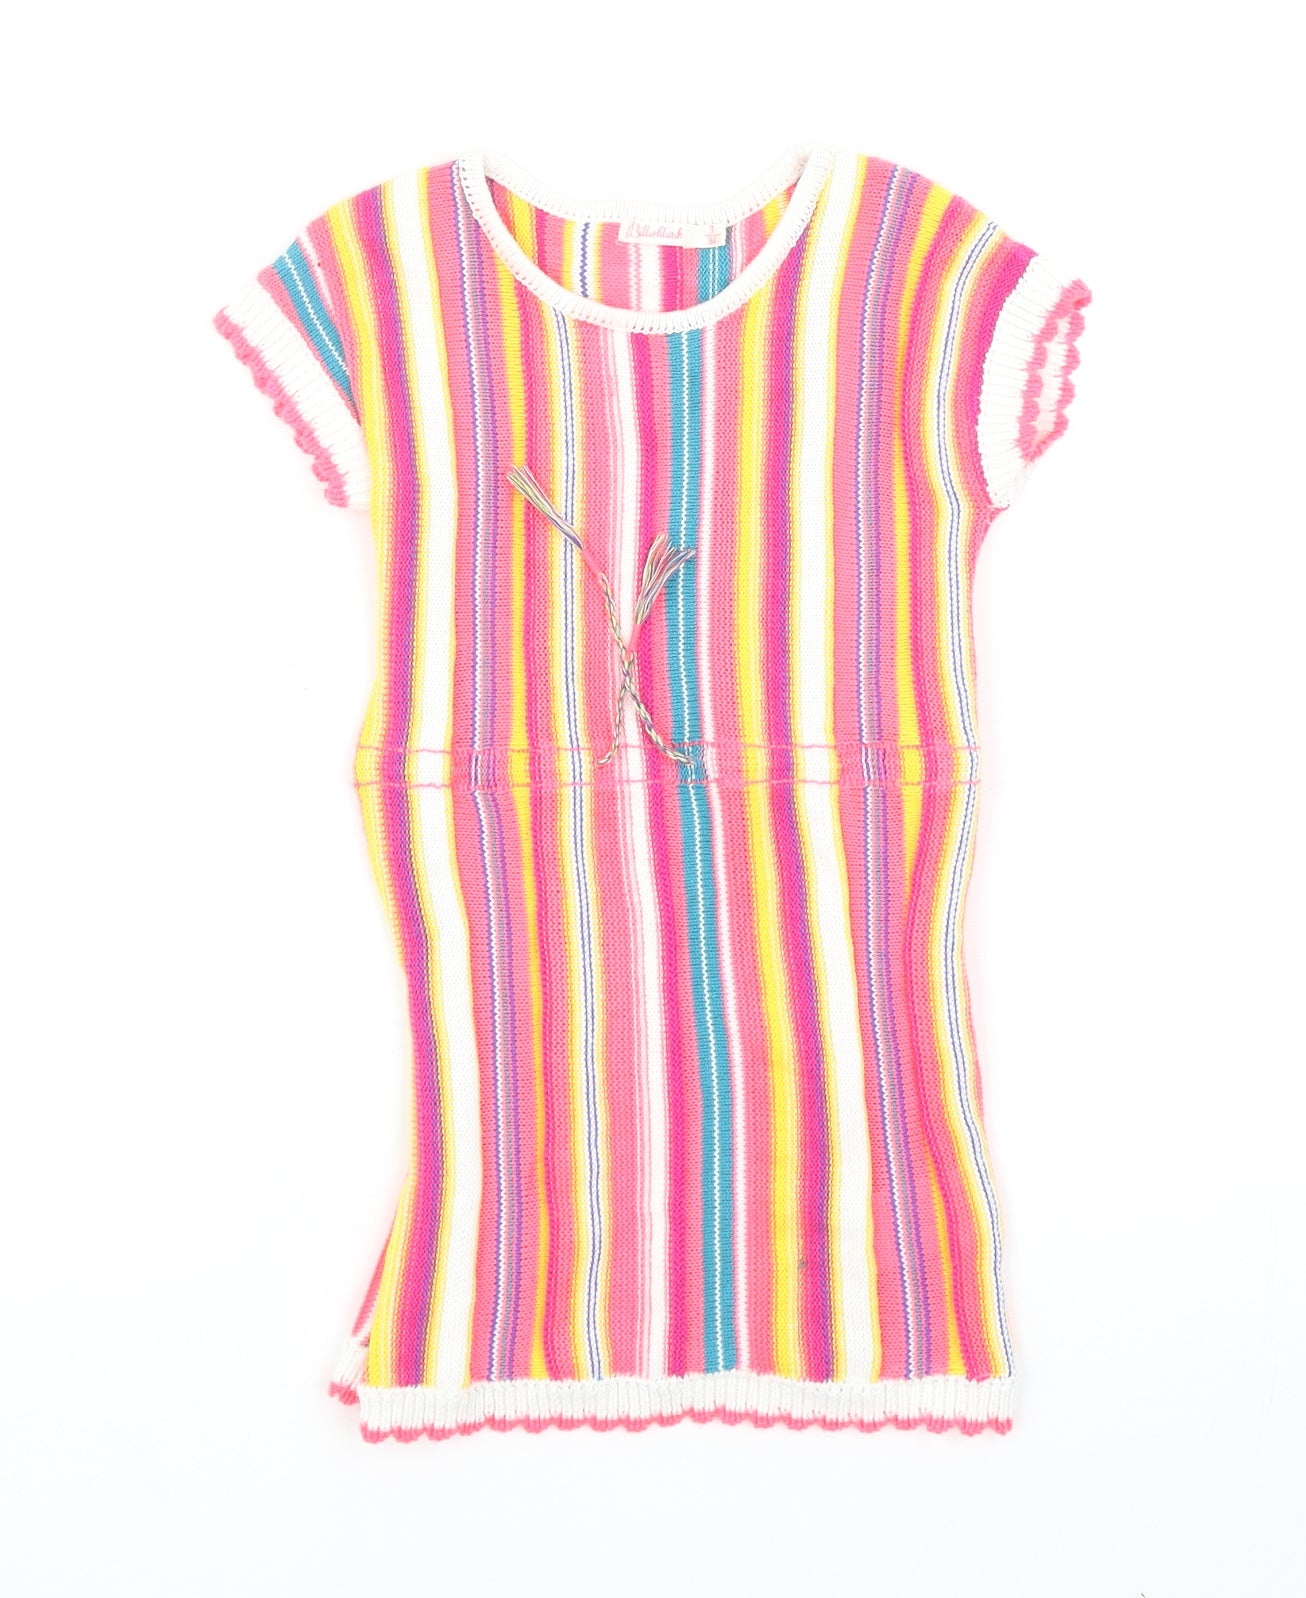 Billieblush Girls Multicoloured Striped Cotton Jumper Dress Size 3 Years Round Neck Drawstring